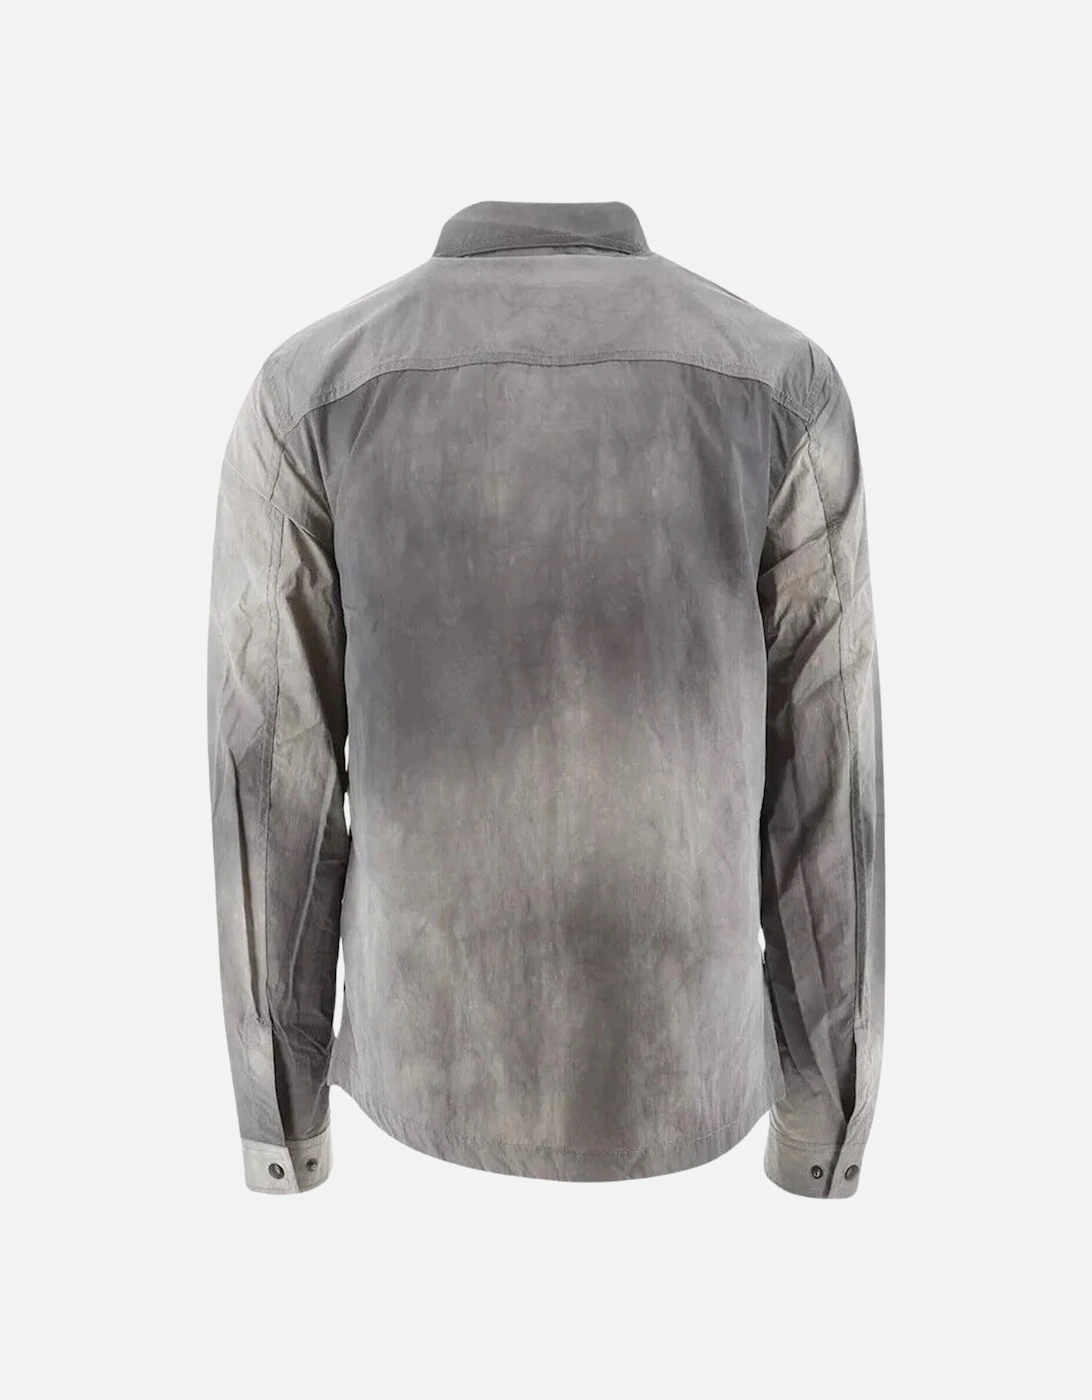 Tour Old Silver Overshirt Grey Jacket